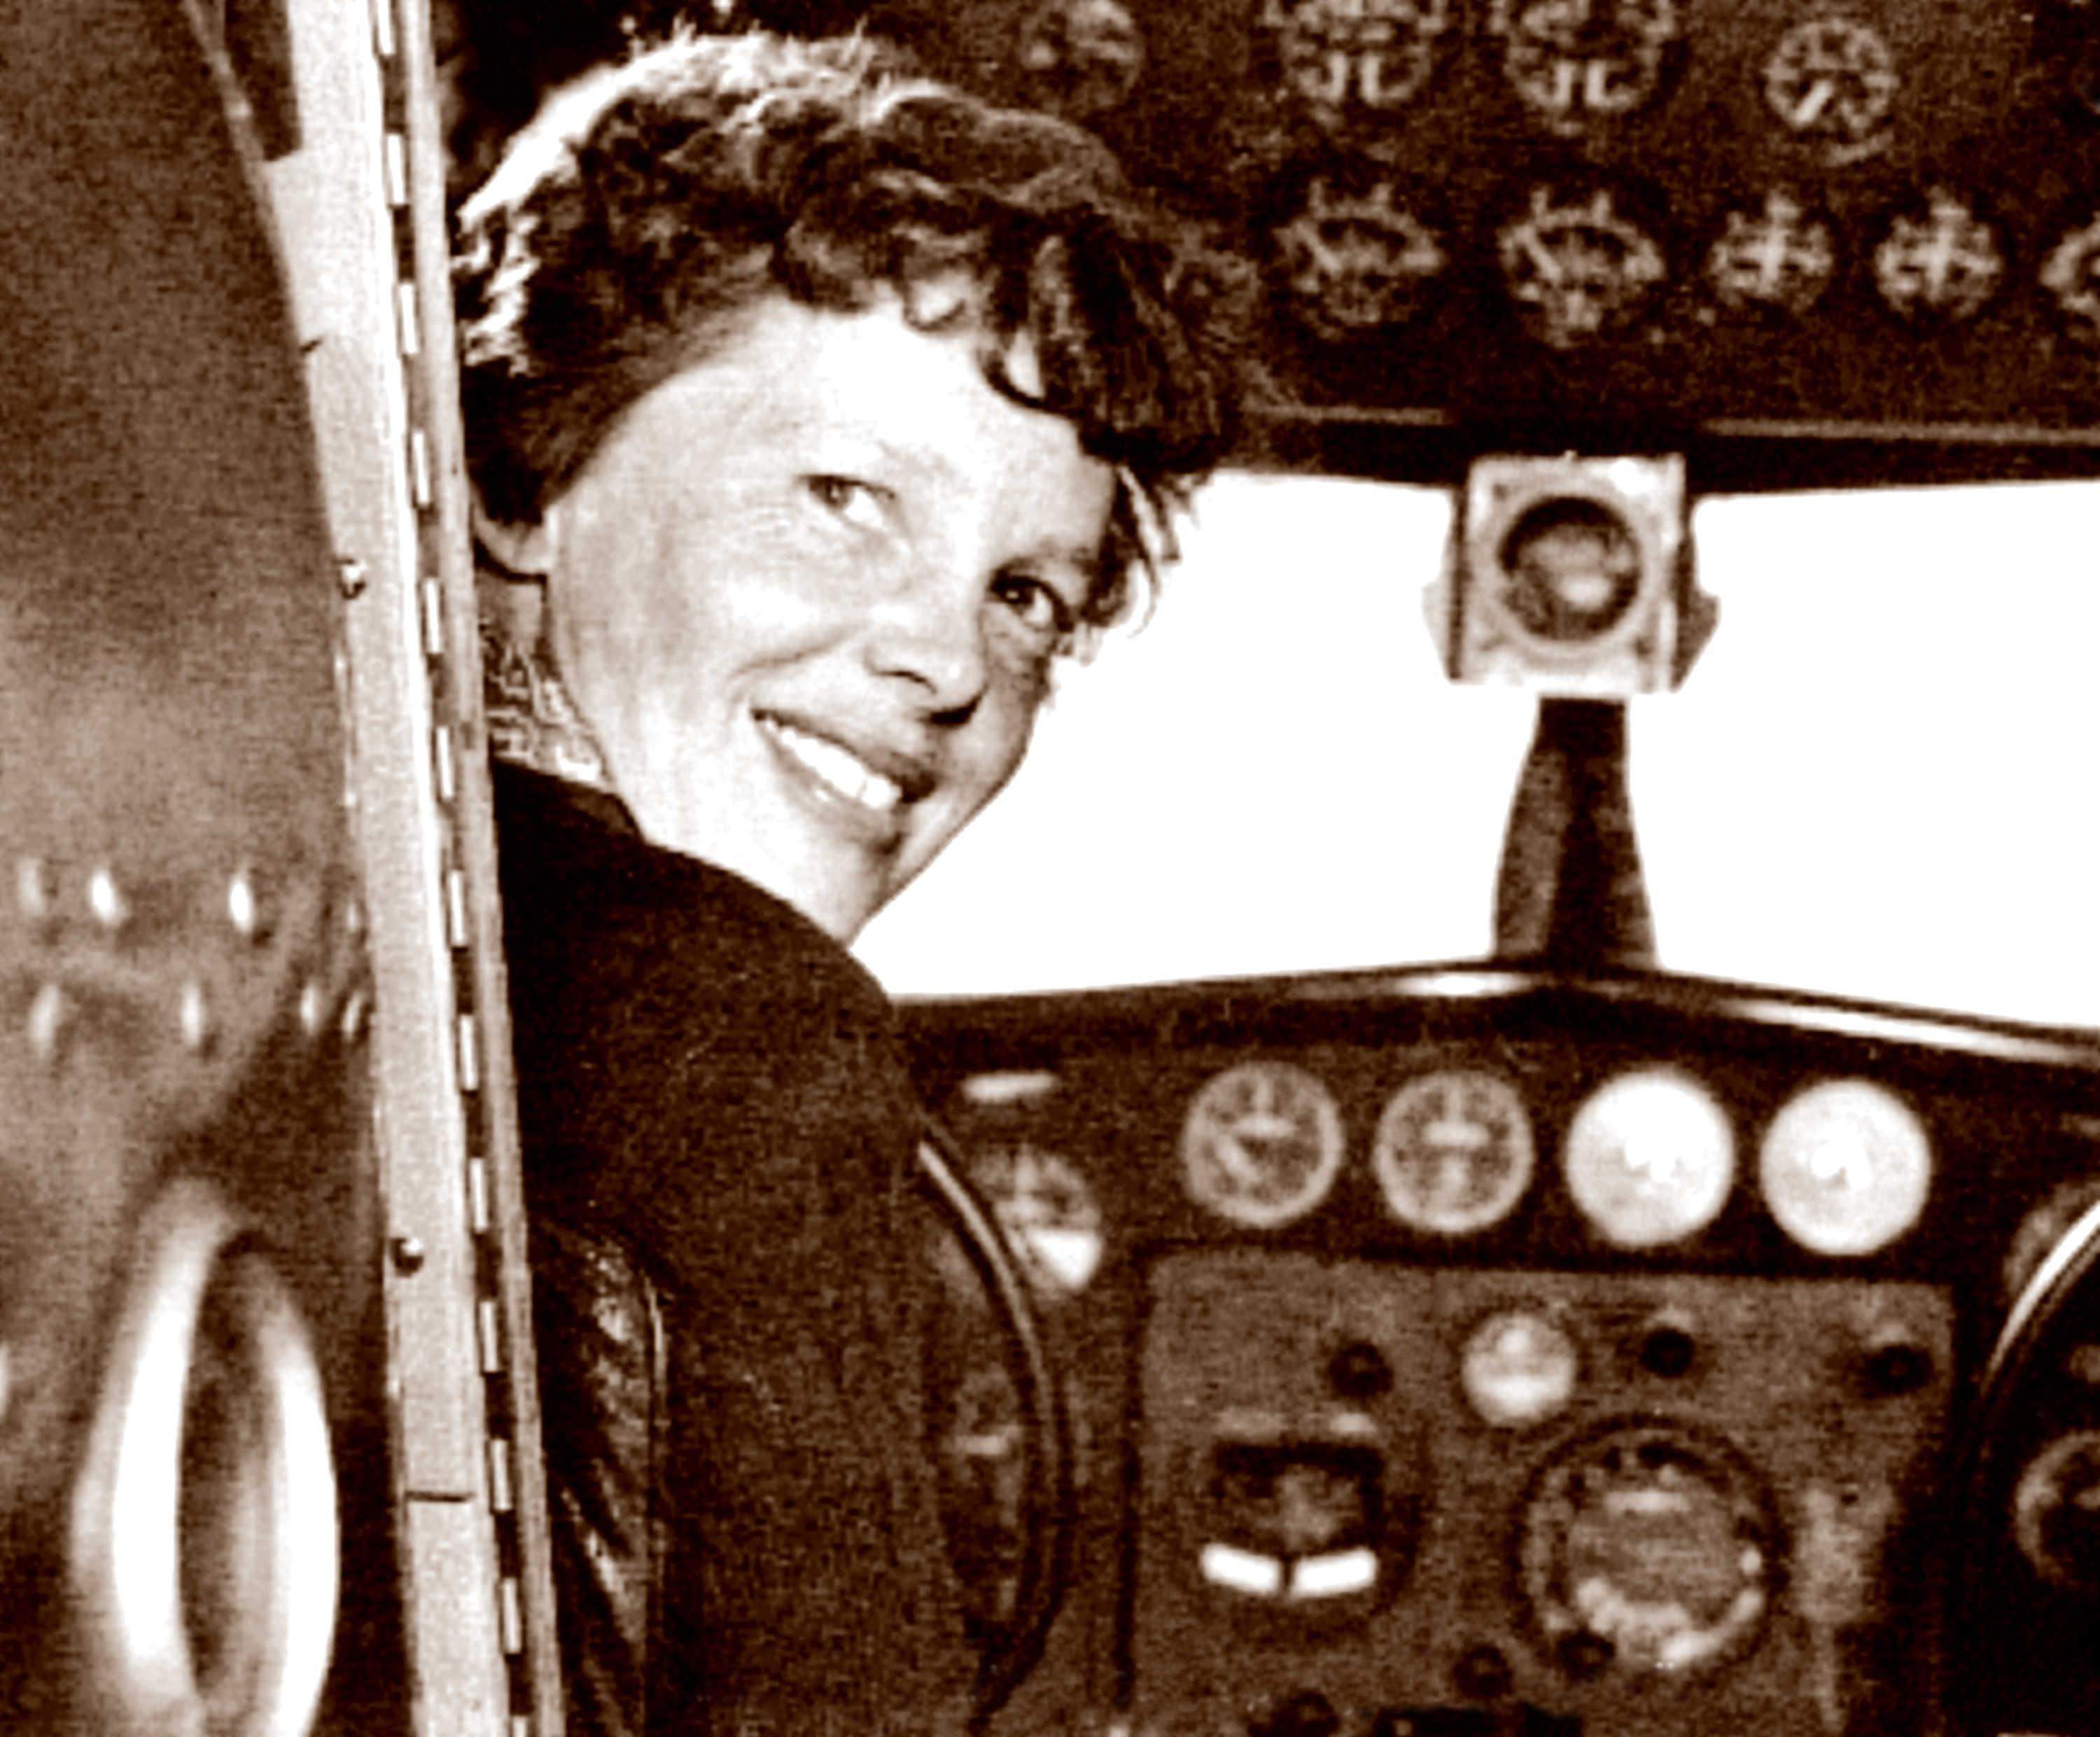 Identificati i resti della leggendaria pilota Amelia Earhart